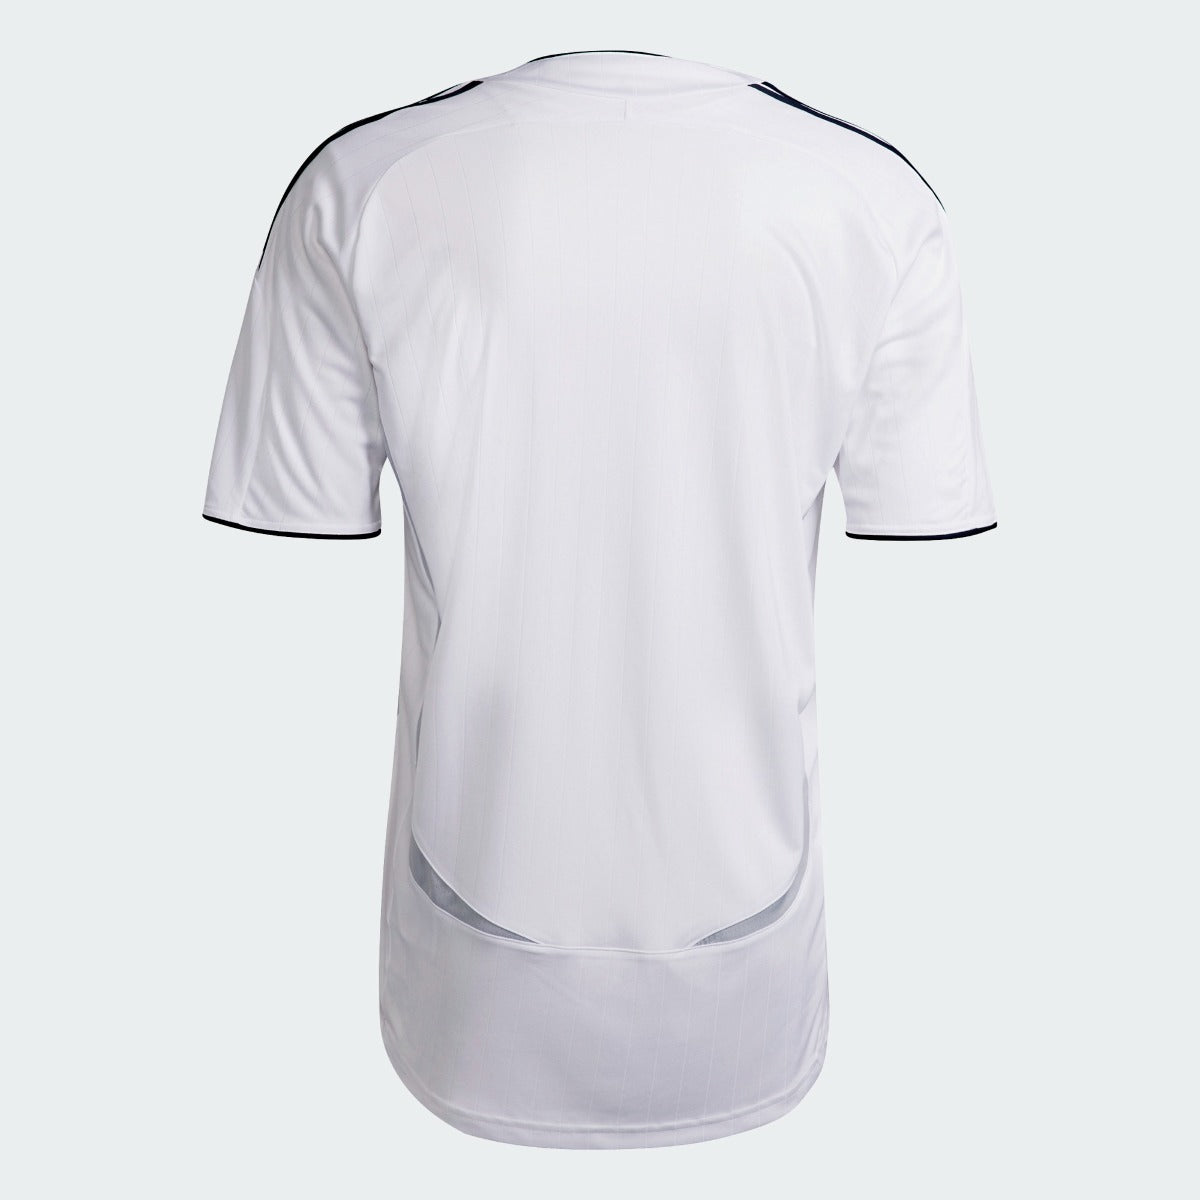 Adidas 2022 Real Madrid Teamgeist Jersey - White (Back)